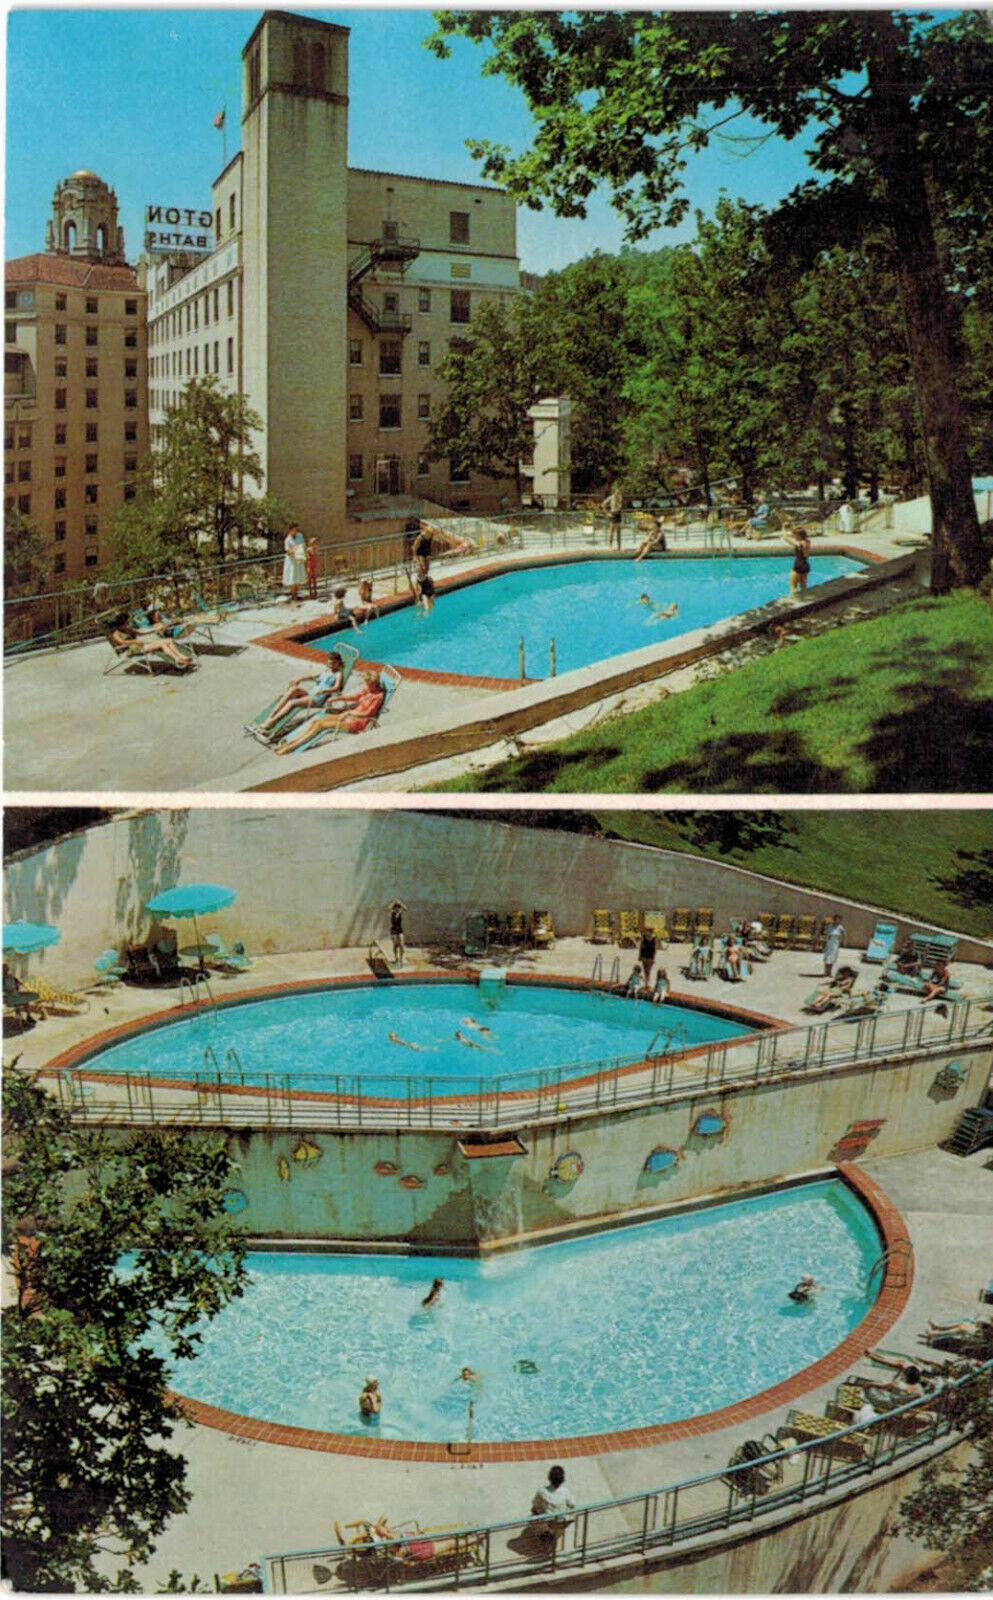 Hot Springs, Arkansas - The Arlington Resort Hotel - Vintage c1960 Postcard